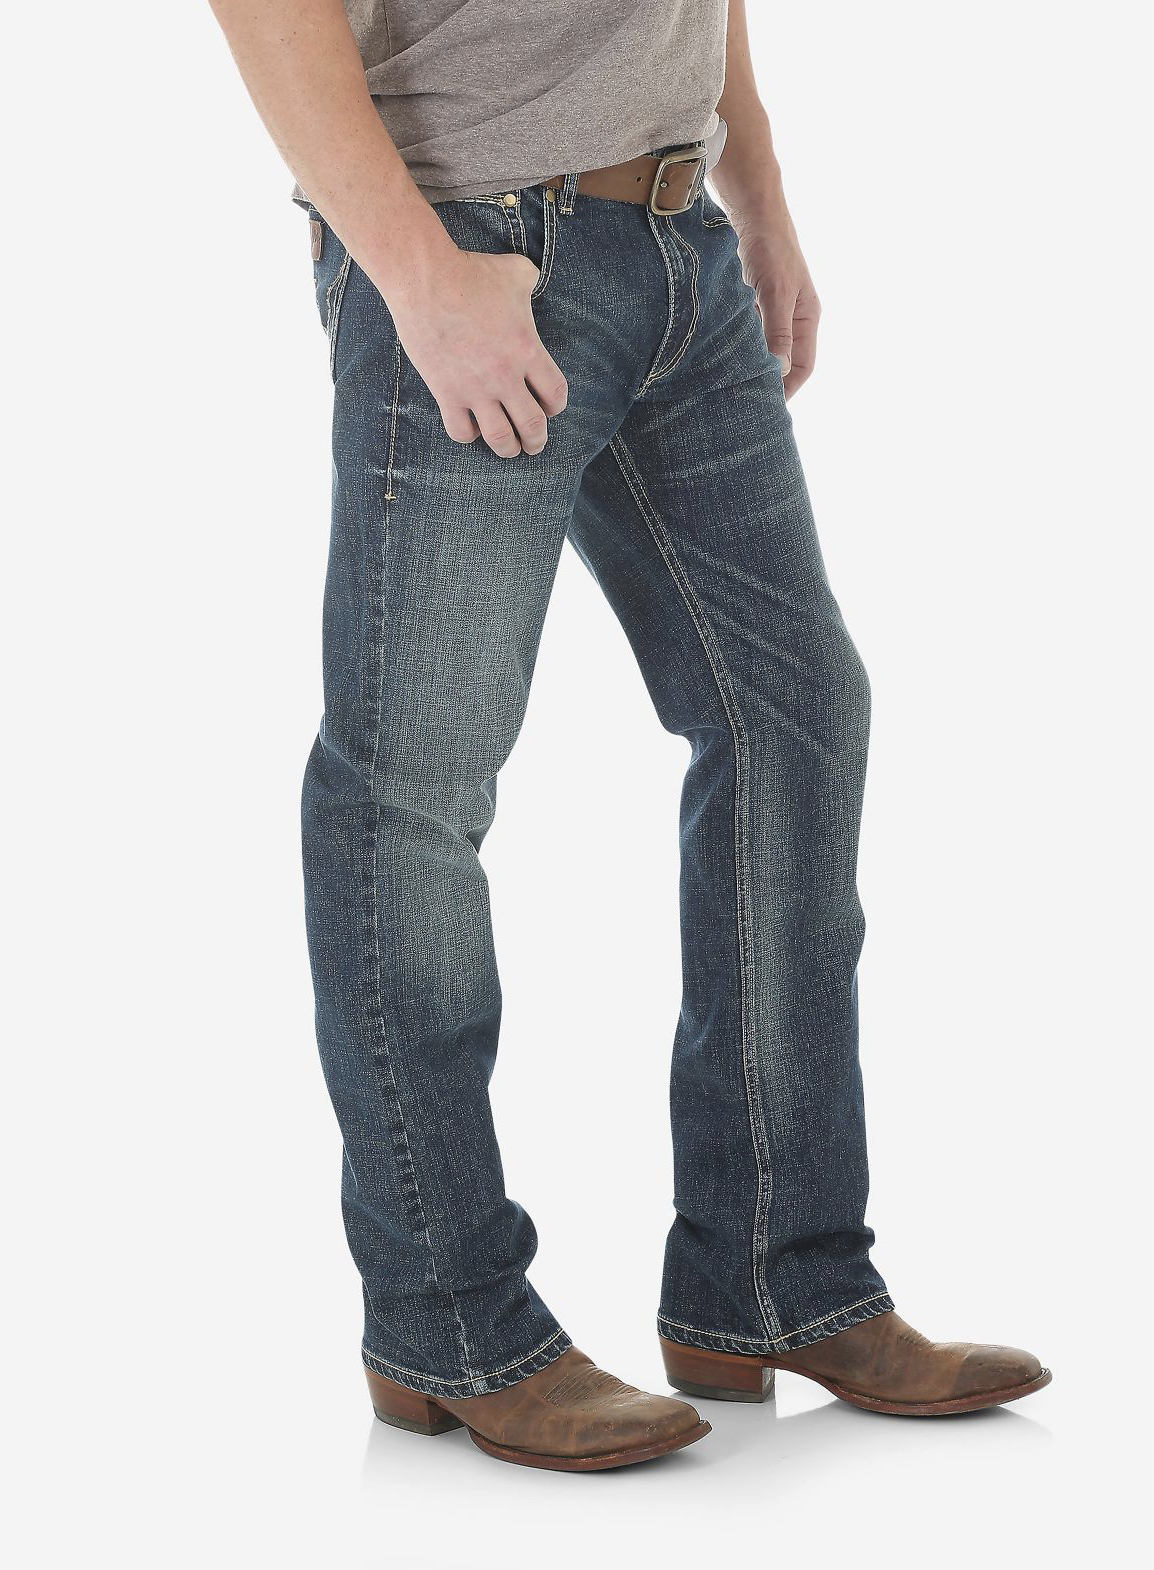 Retro Slim Fit Bootcut Jean (Layton) By Wrangler